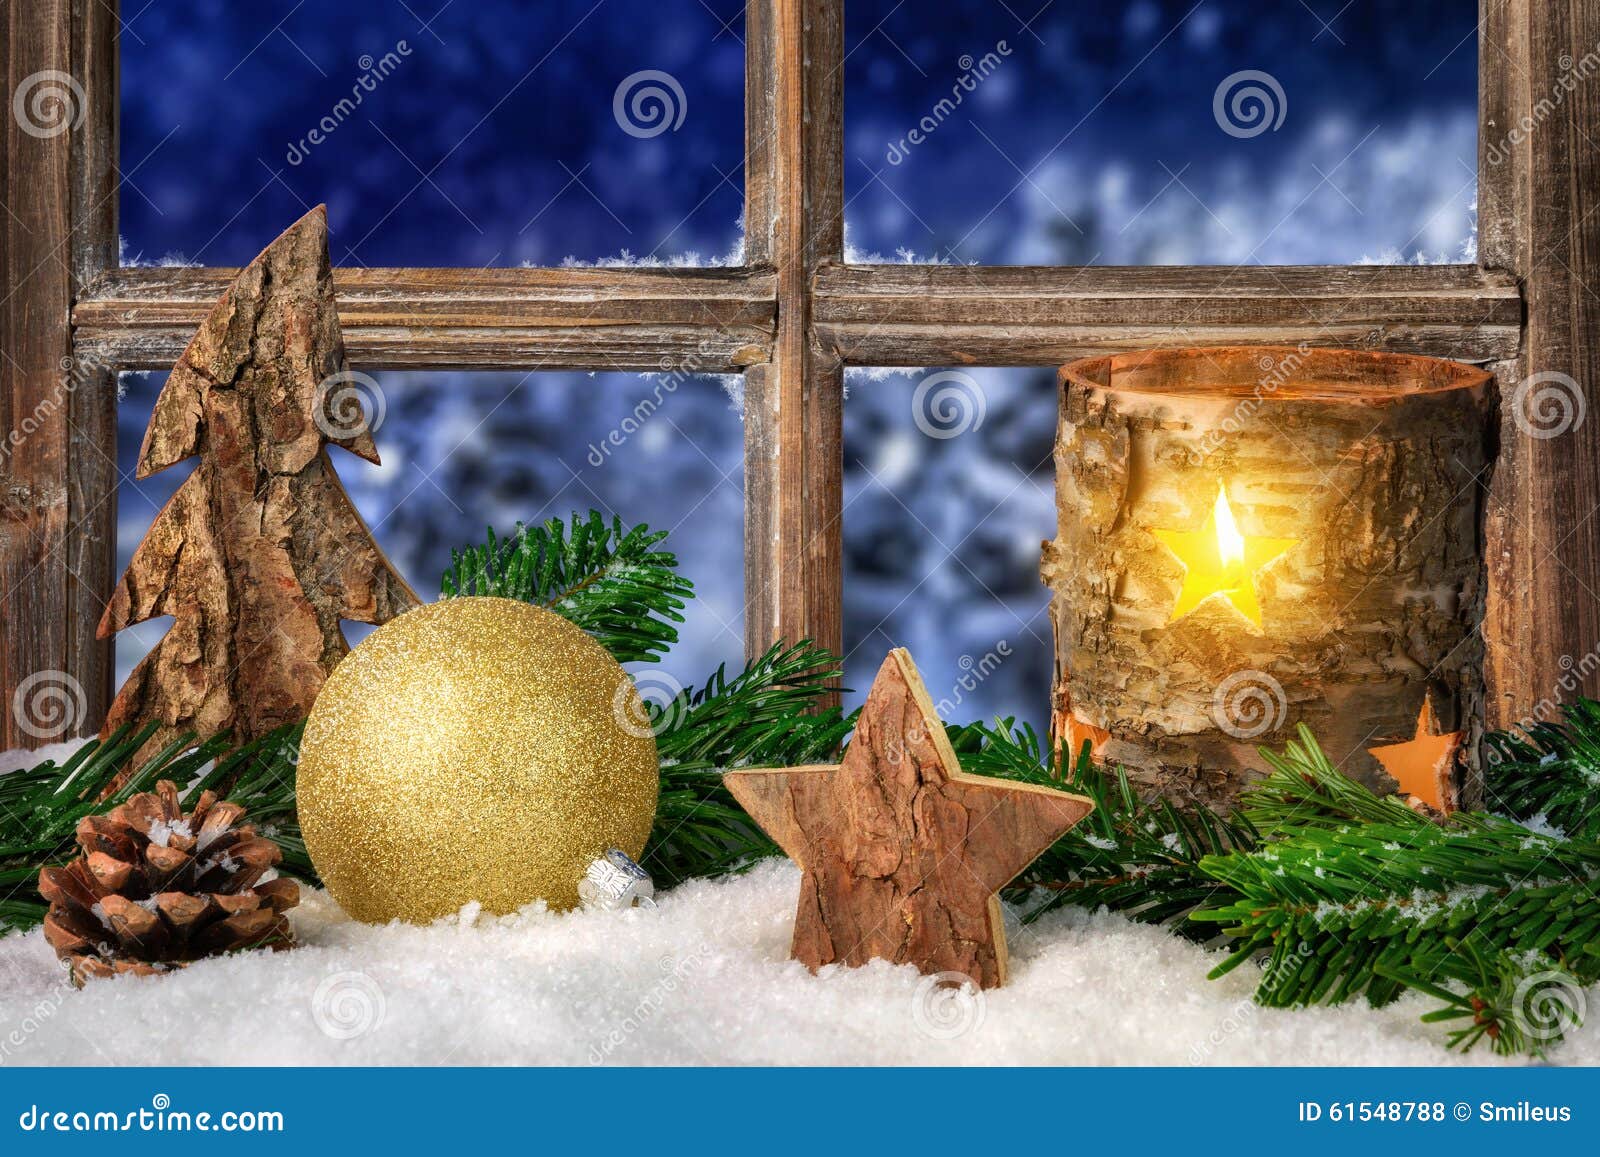 Seasonal Arrangement on the Window Sill Stock Photo - Image of mood ...